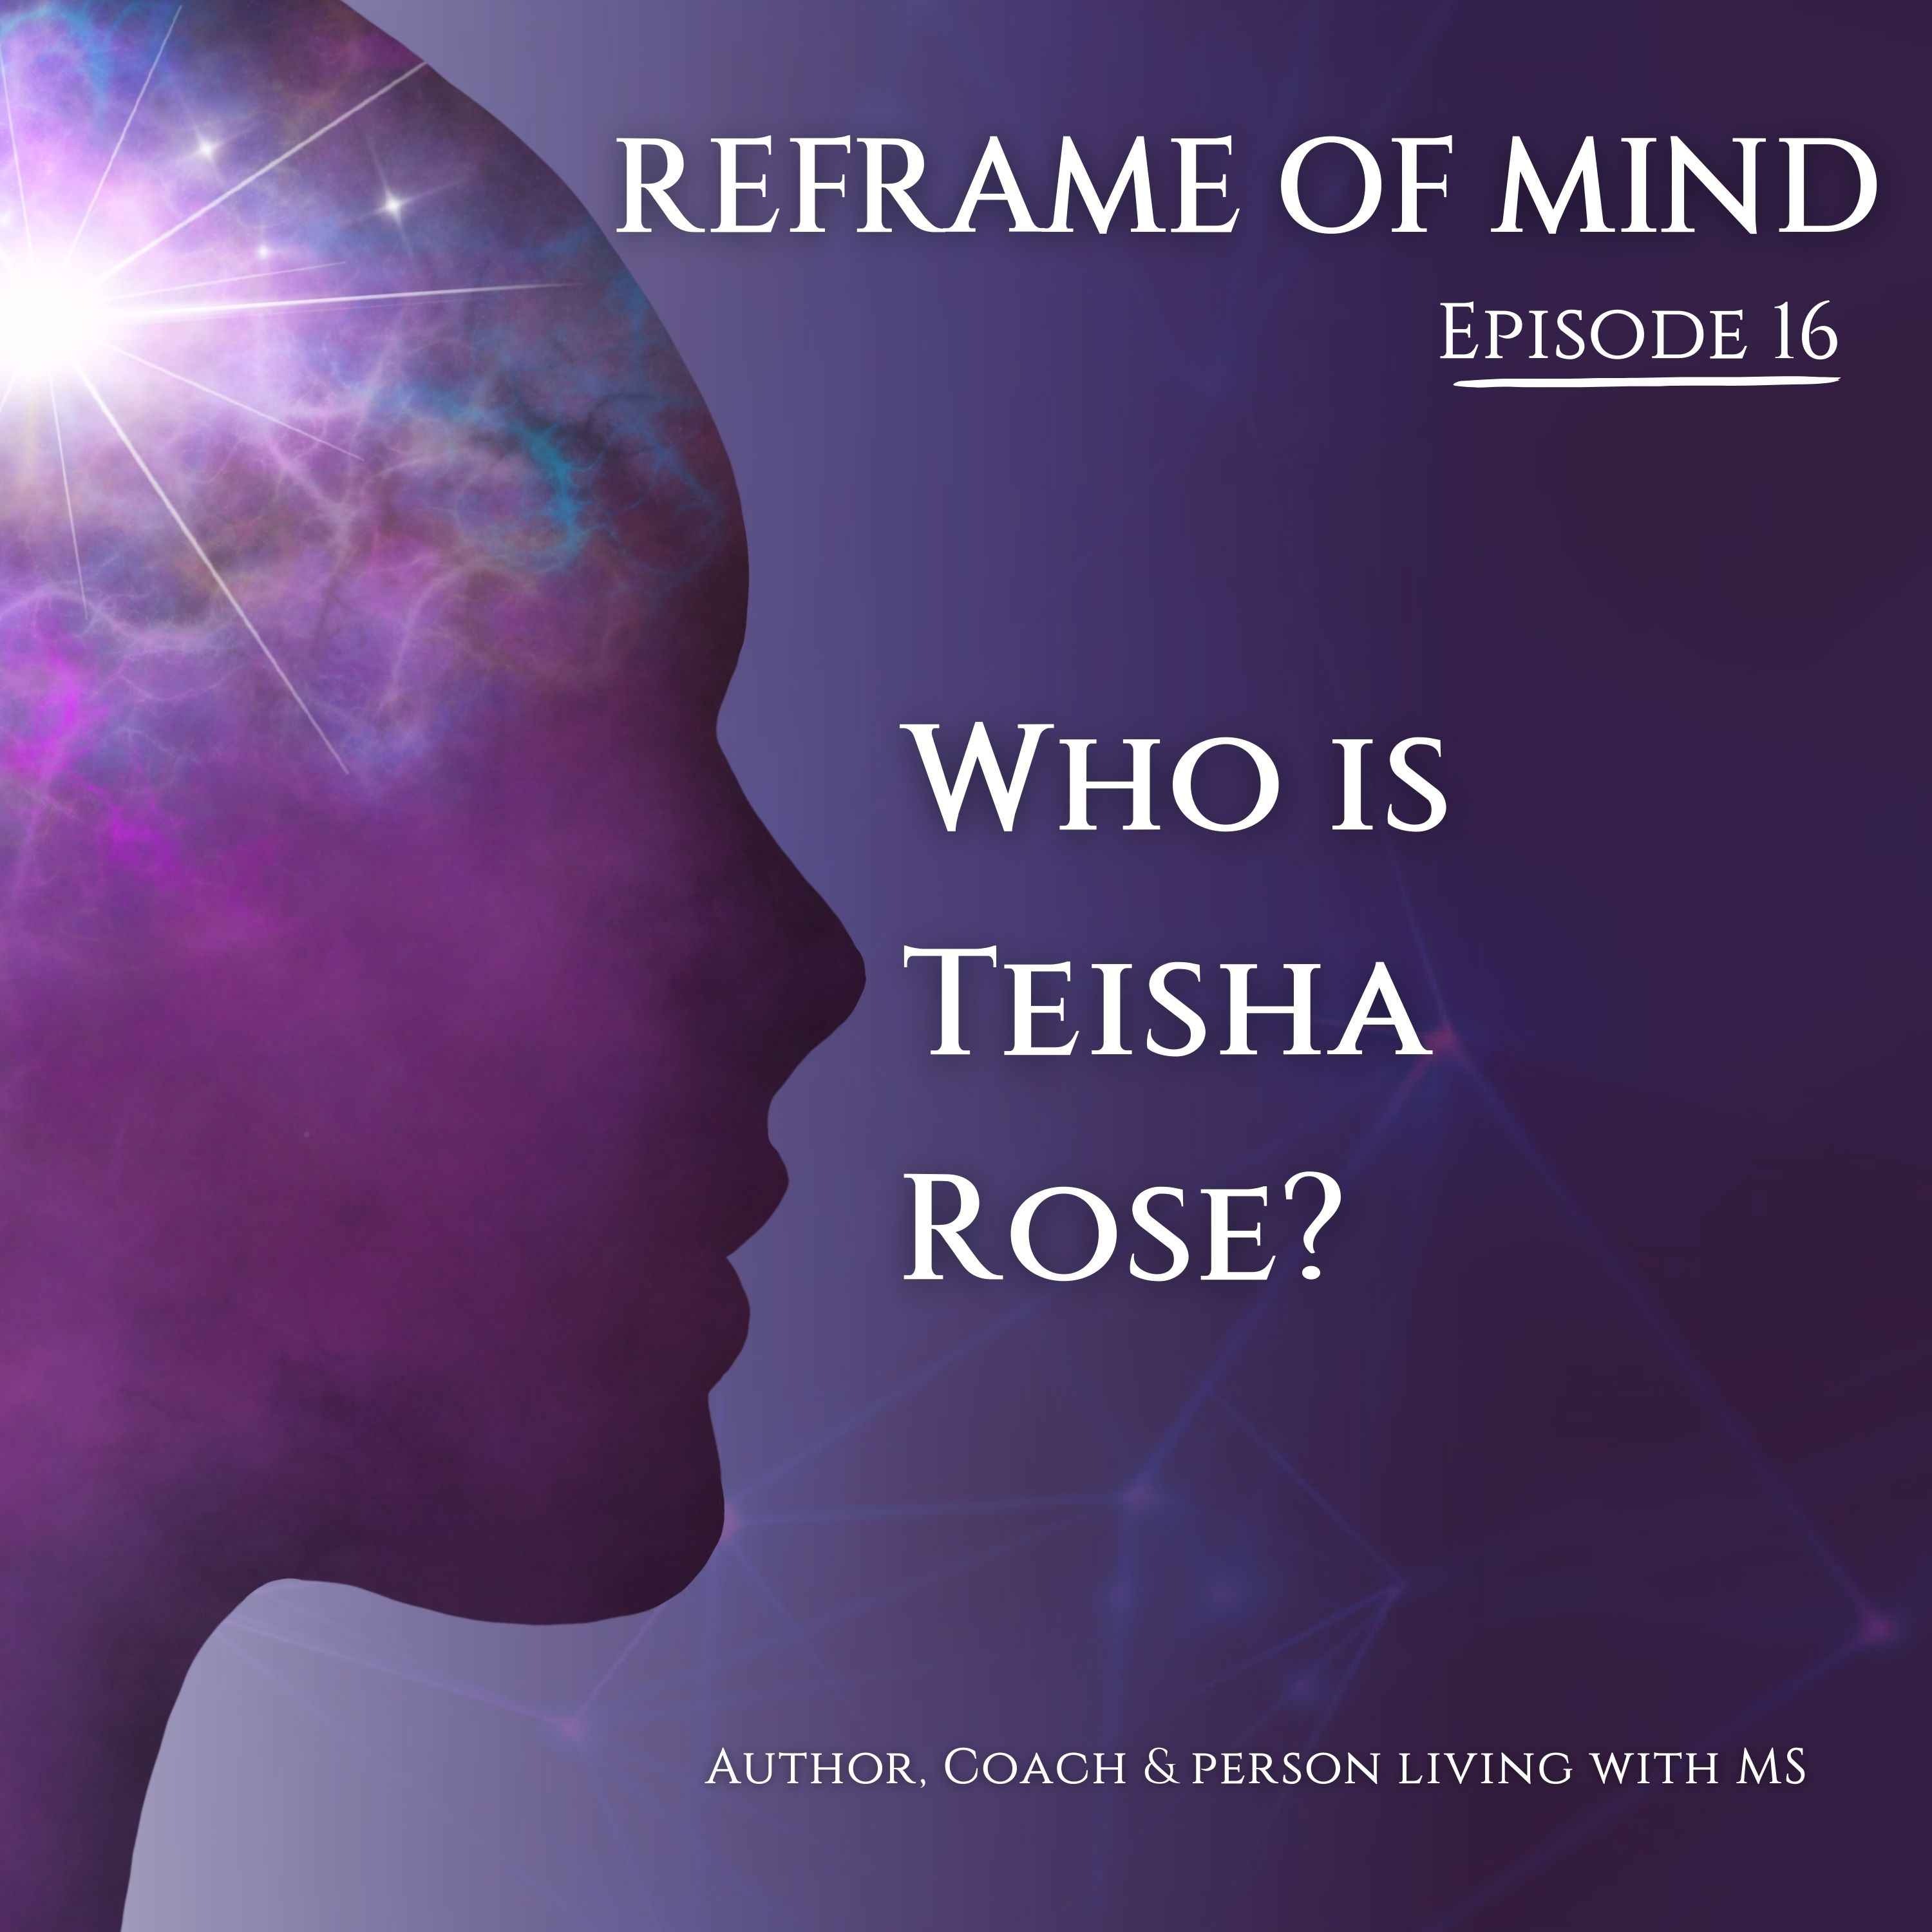 Who is Teisha Rose?